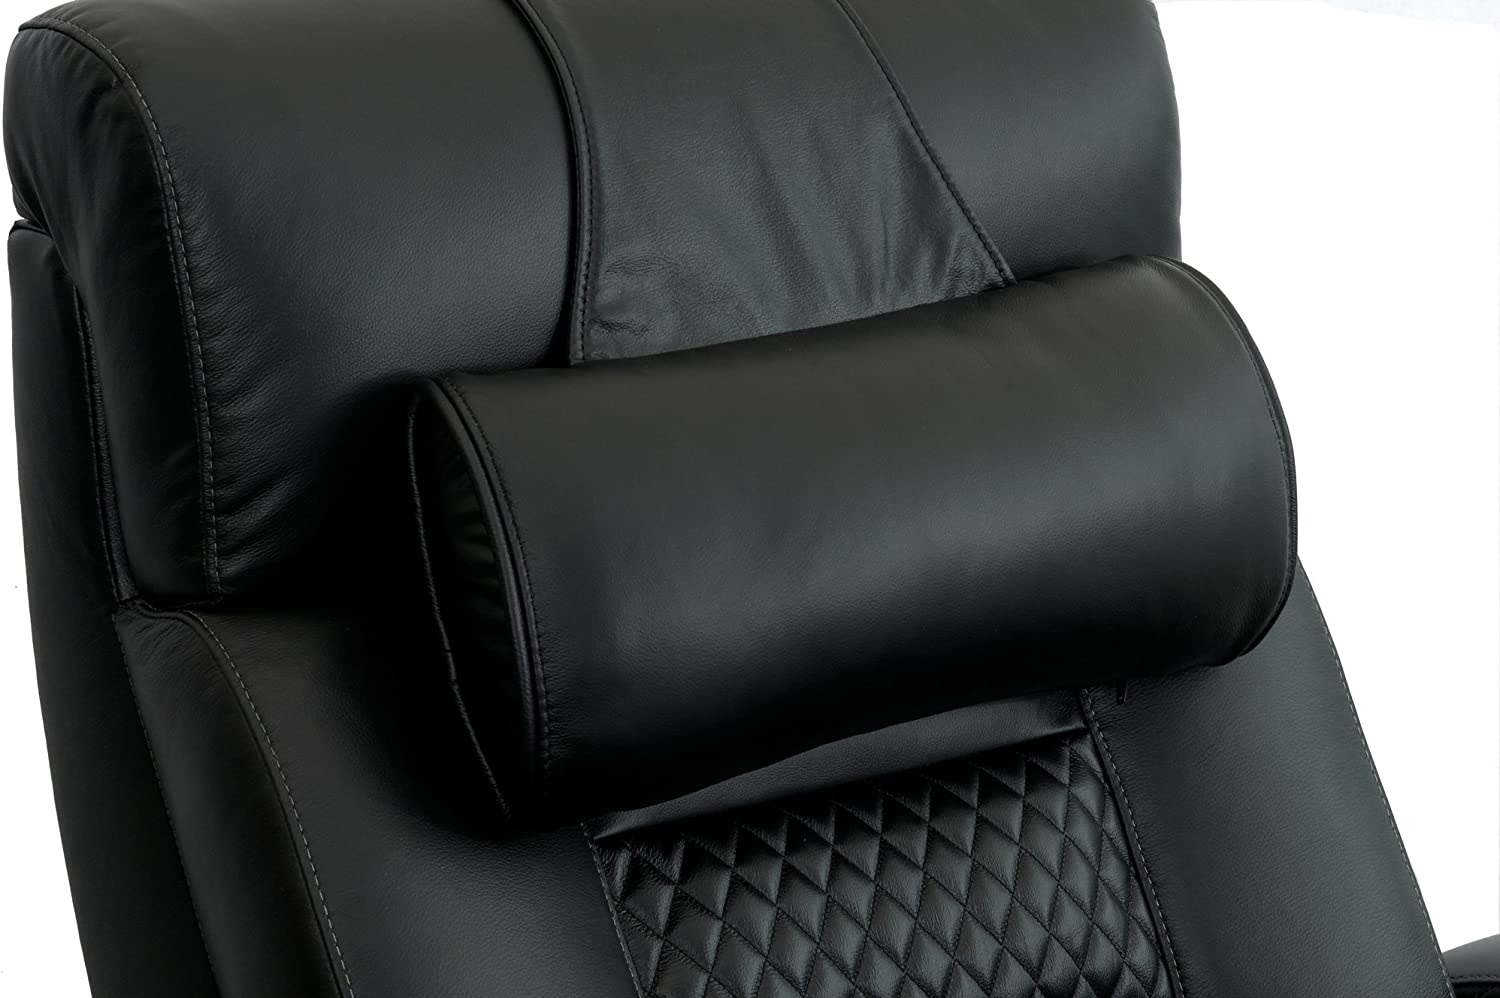 Octane Seating Octane Black Leather Recliner Neck Pillow